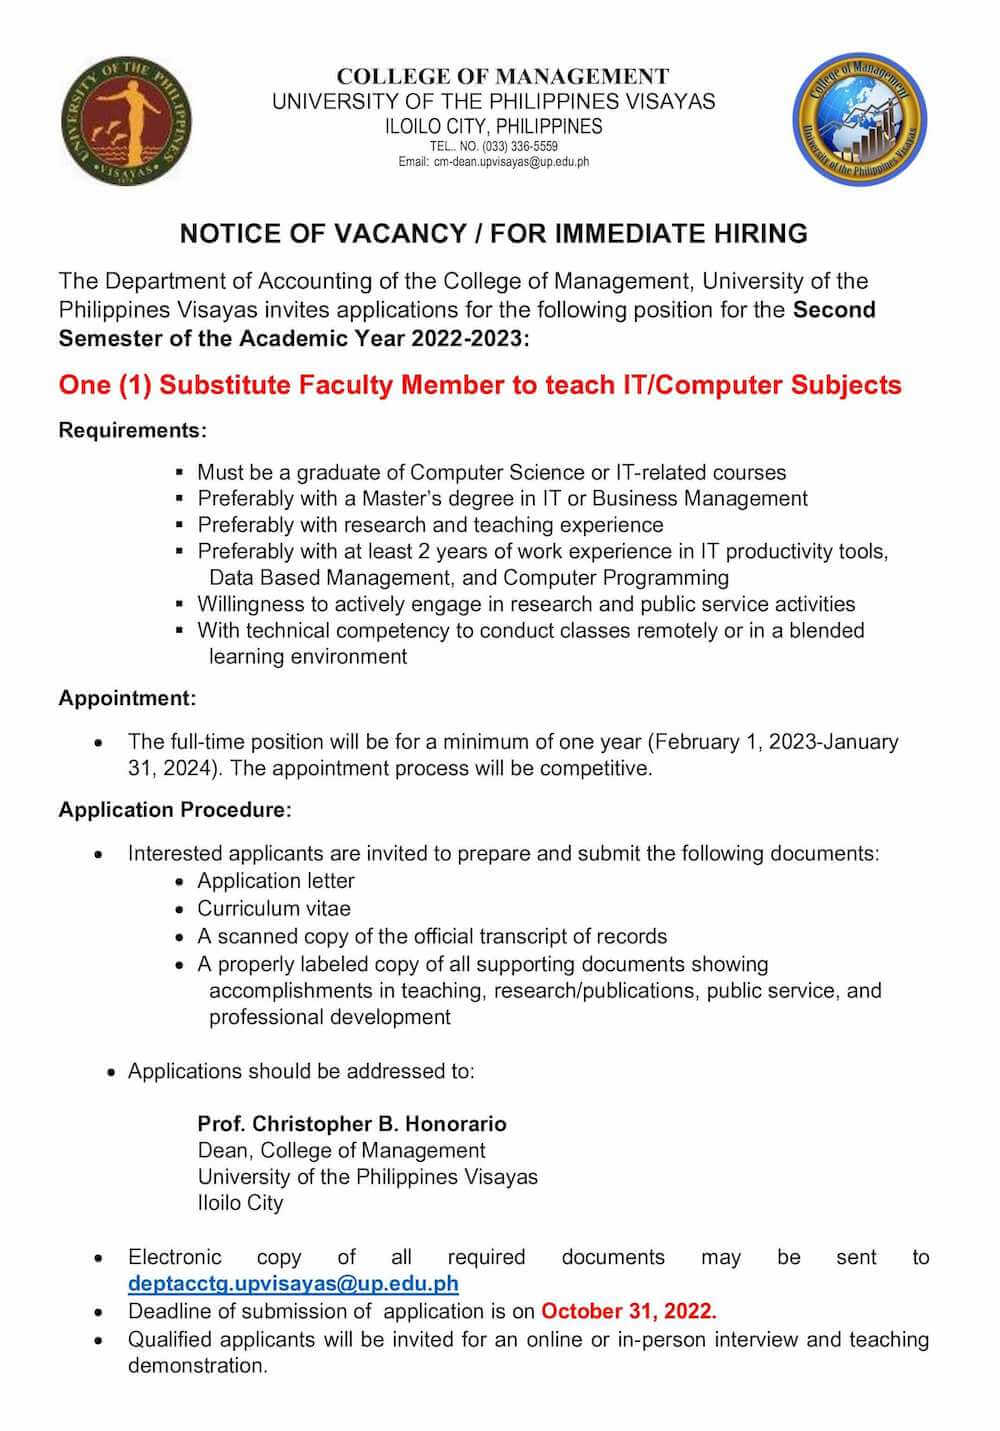 hiring faculty cm acctg it 1022